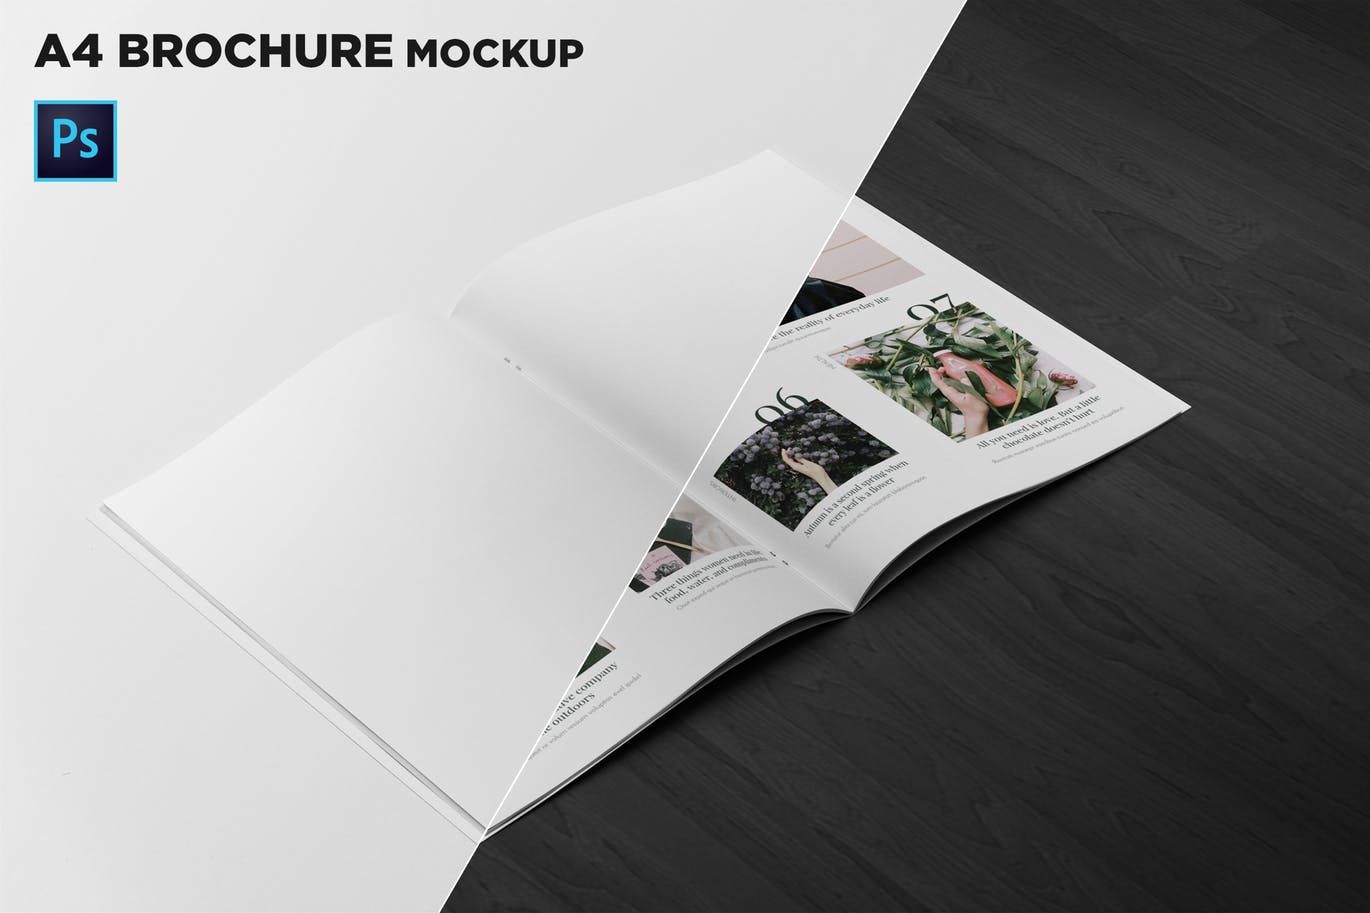 A4宣传小册子/企业画册内页版式设计45度角视图样机素材中国精选 A4 Brochure Mockup 2 Pages Spread插图